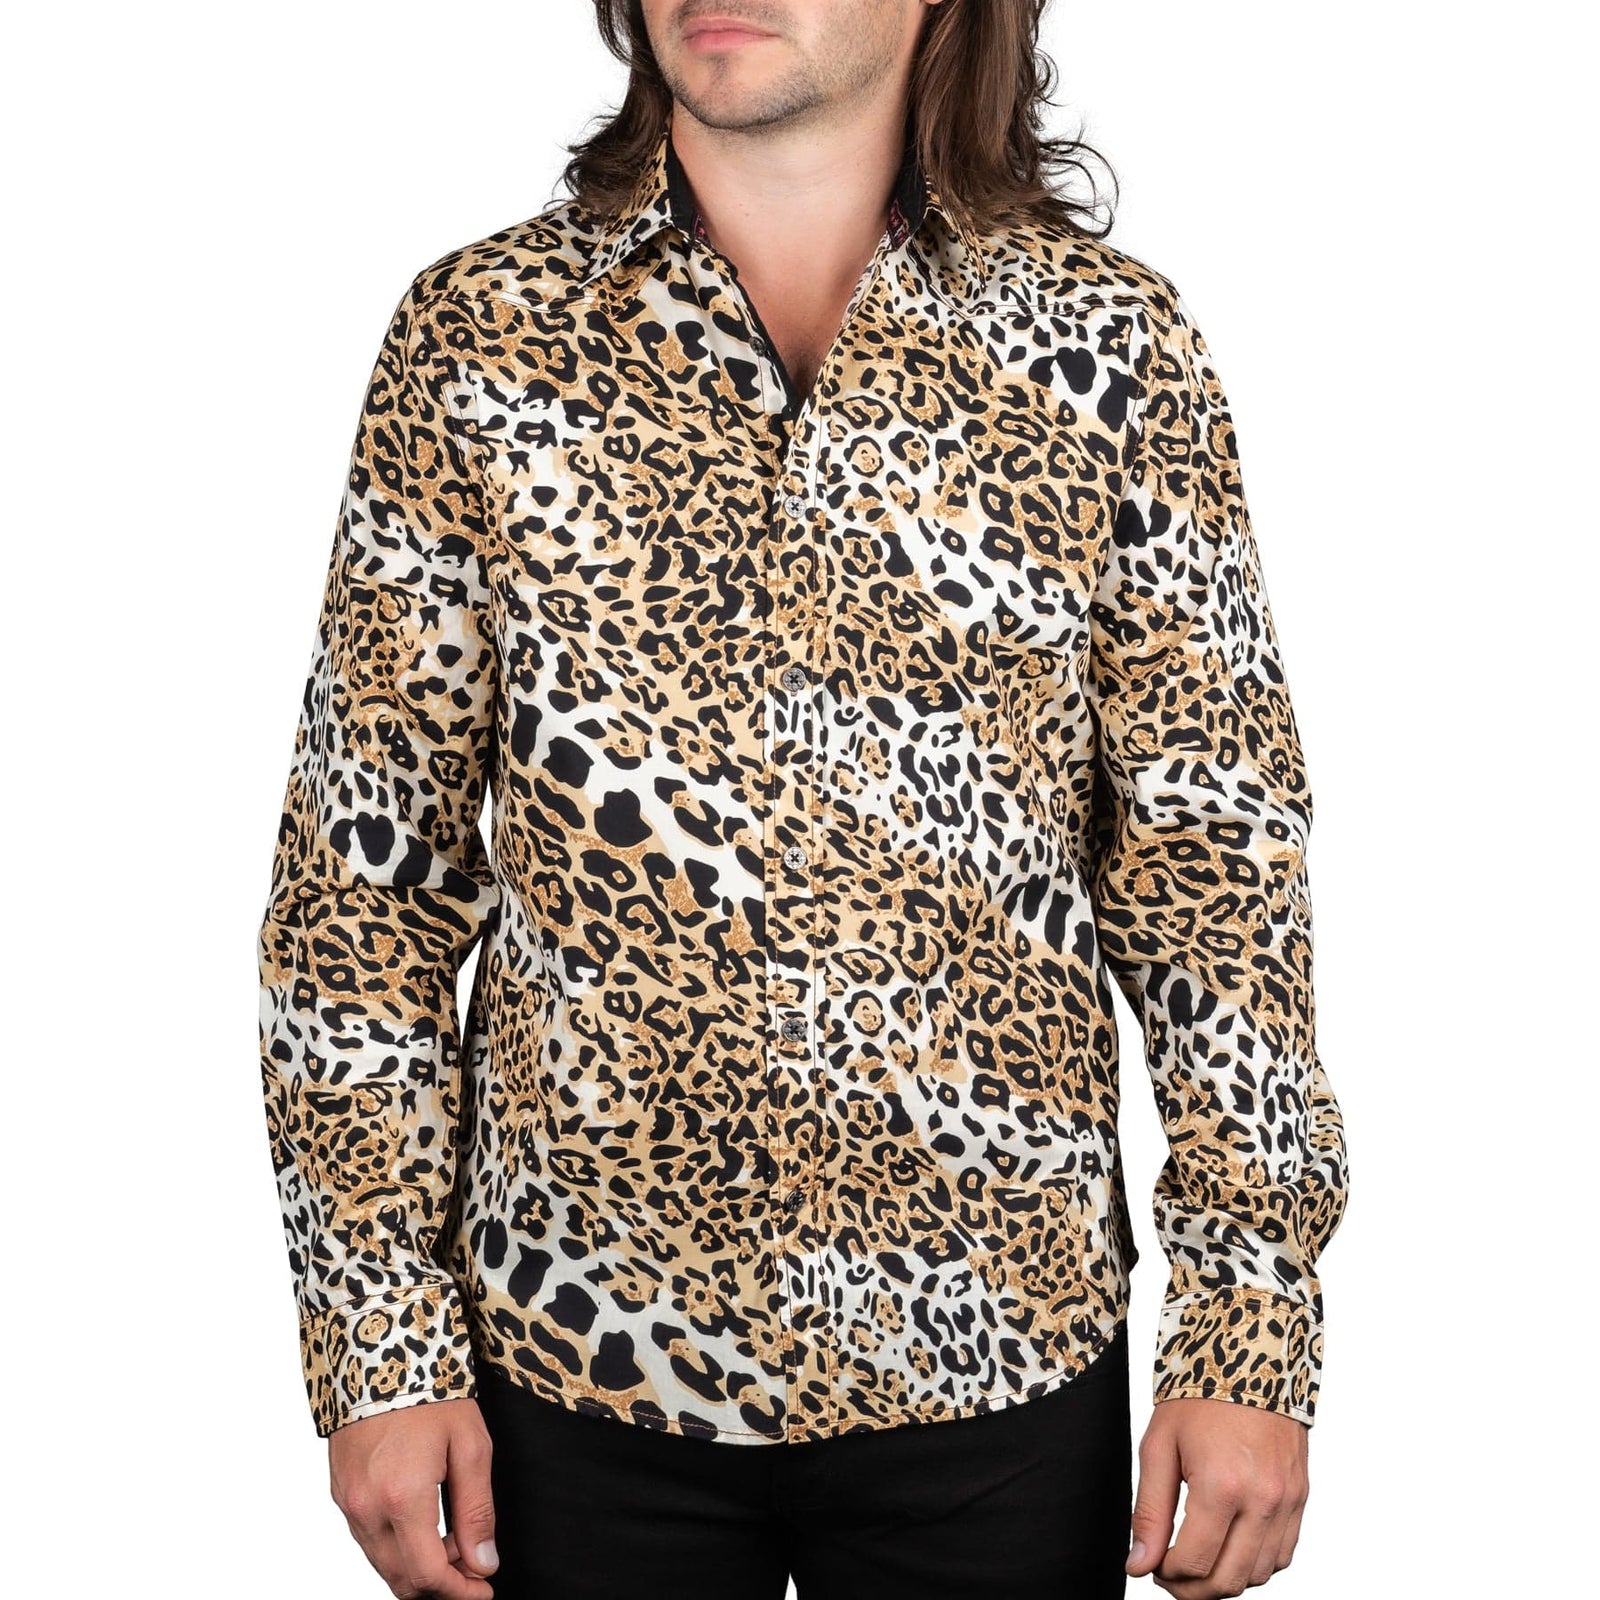 Wornstar Clothing Leopard Mens Shirt